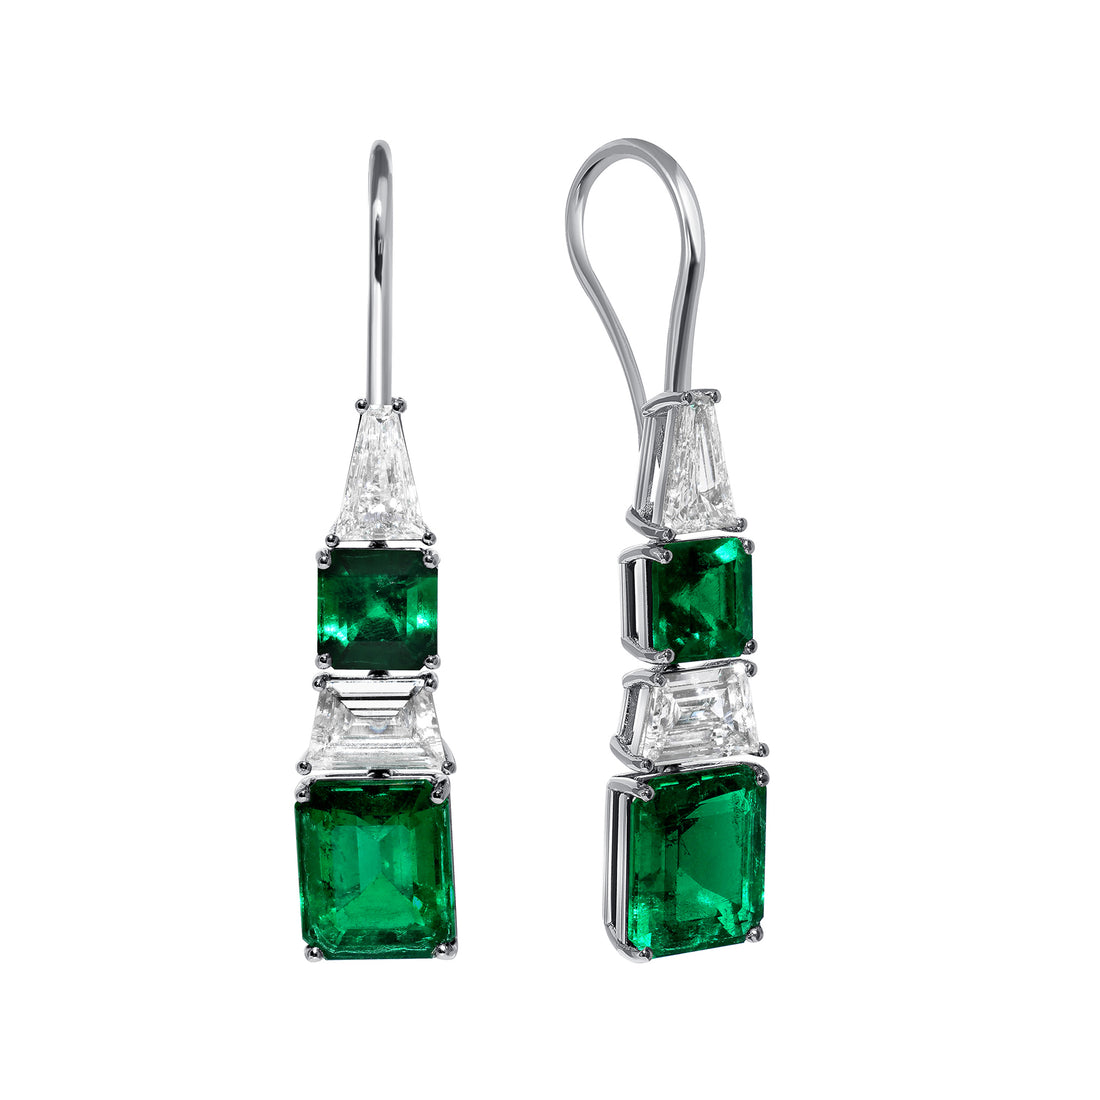 Trapezoid and Mix Cut Diamond and Emerald Cut Emerald Dangling Earrings